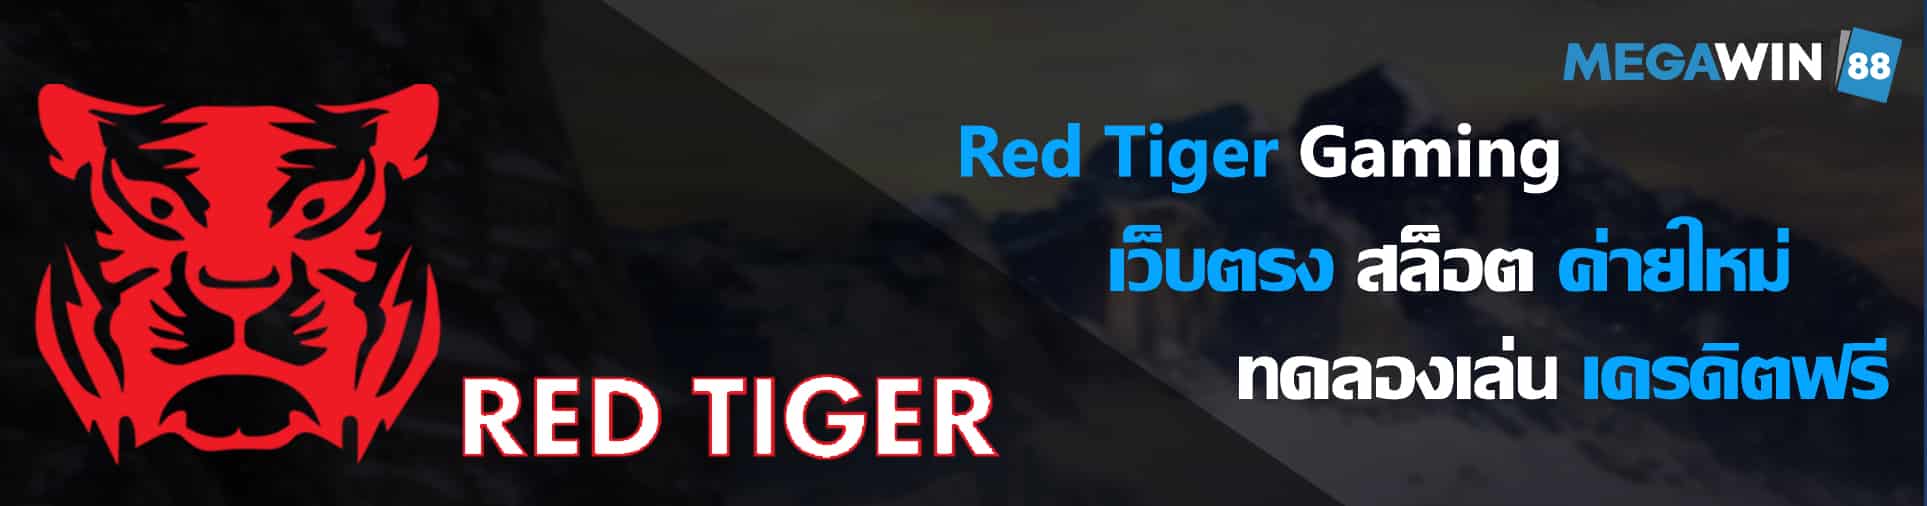 banner red tiger